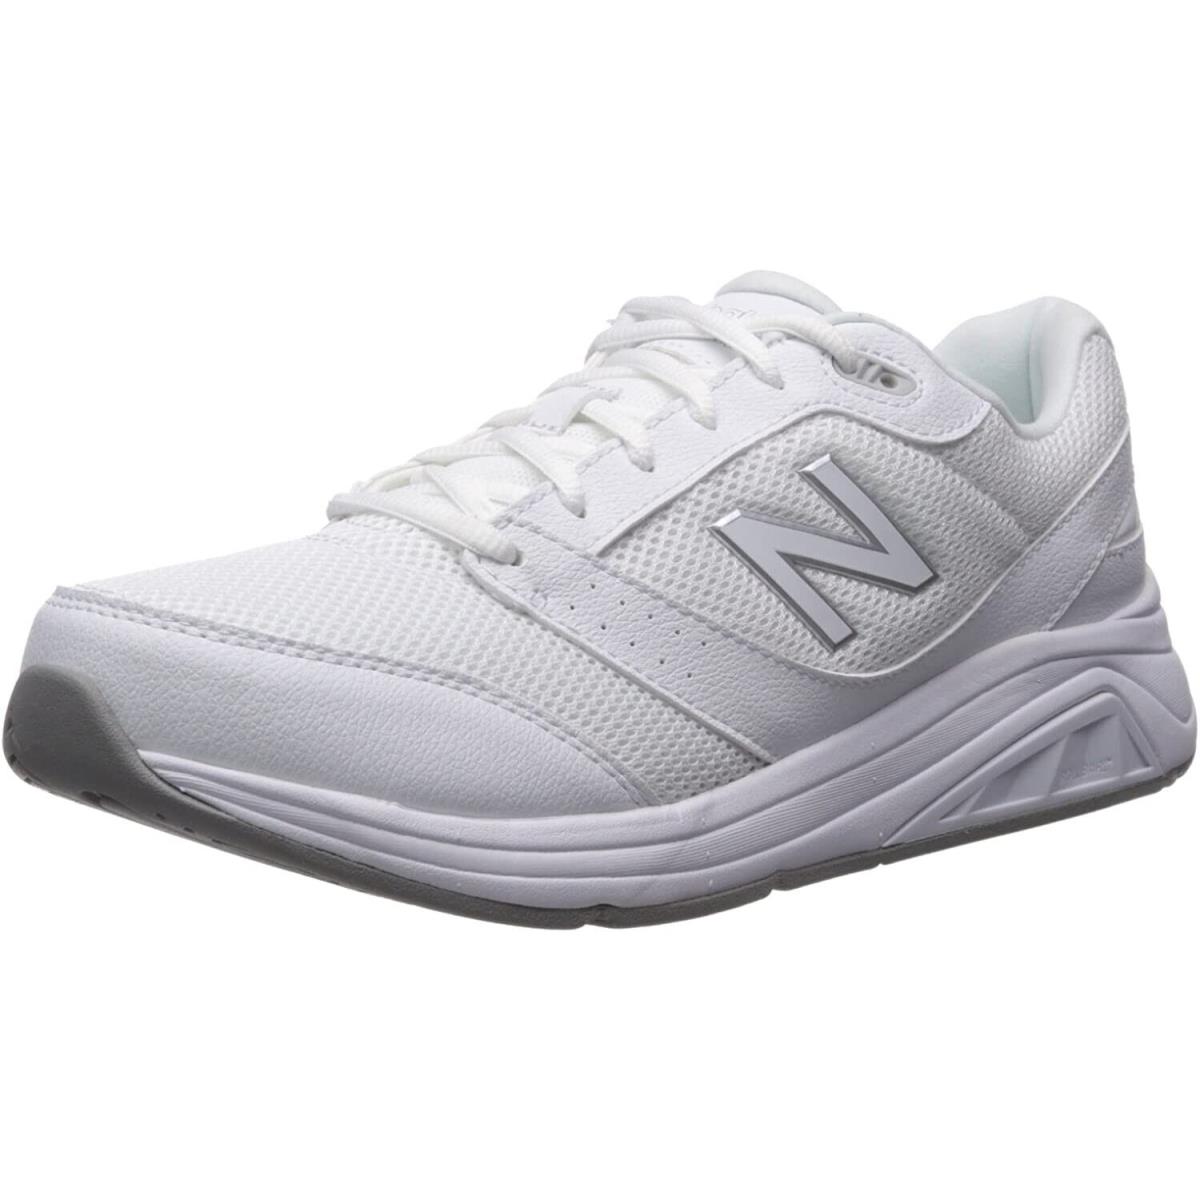 New Balance Women`s 928 V3 Lace-up Walking Shoes White 13 2E Xwide US - White